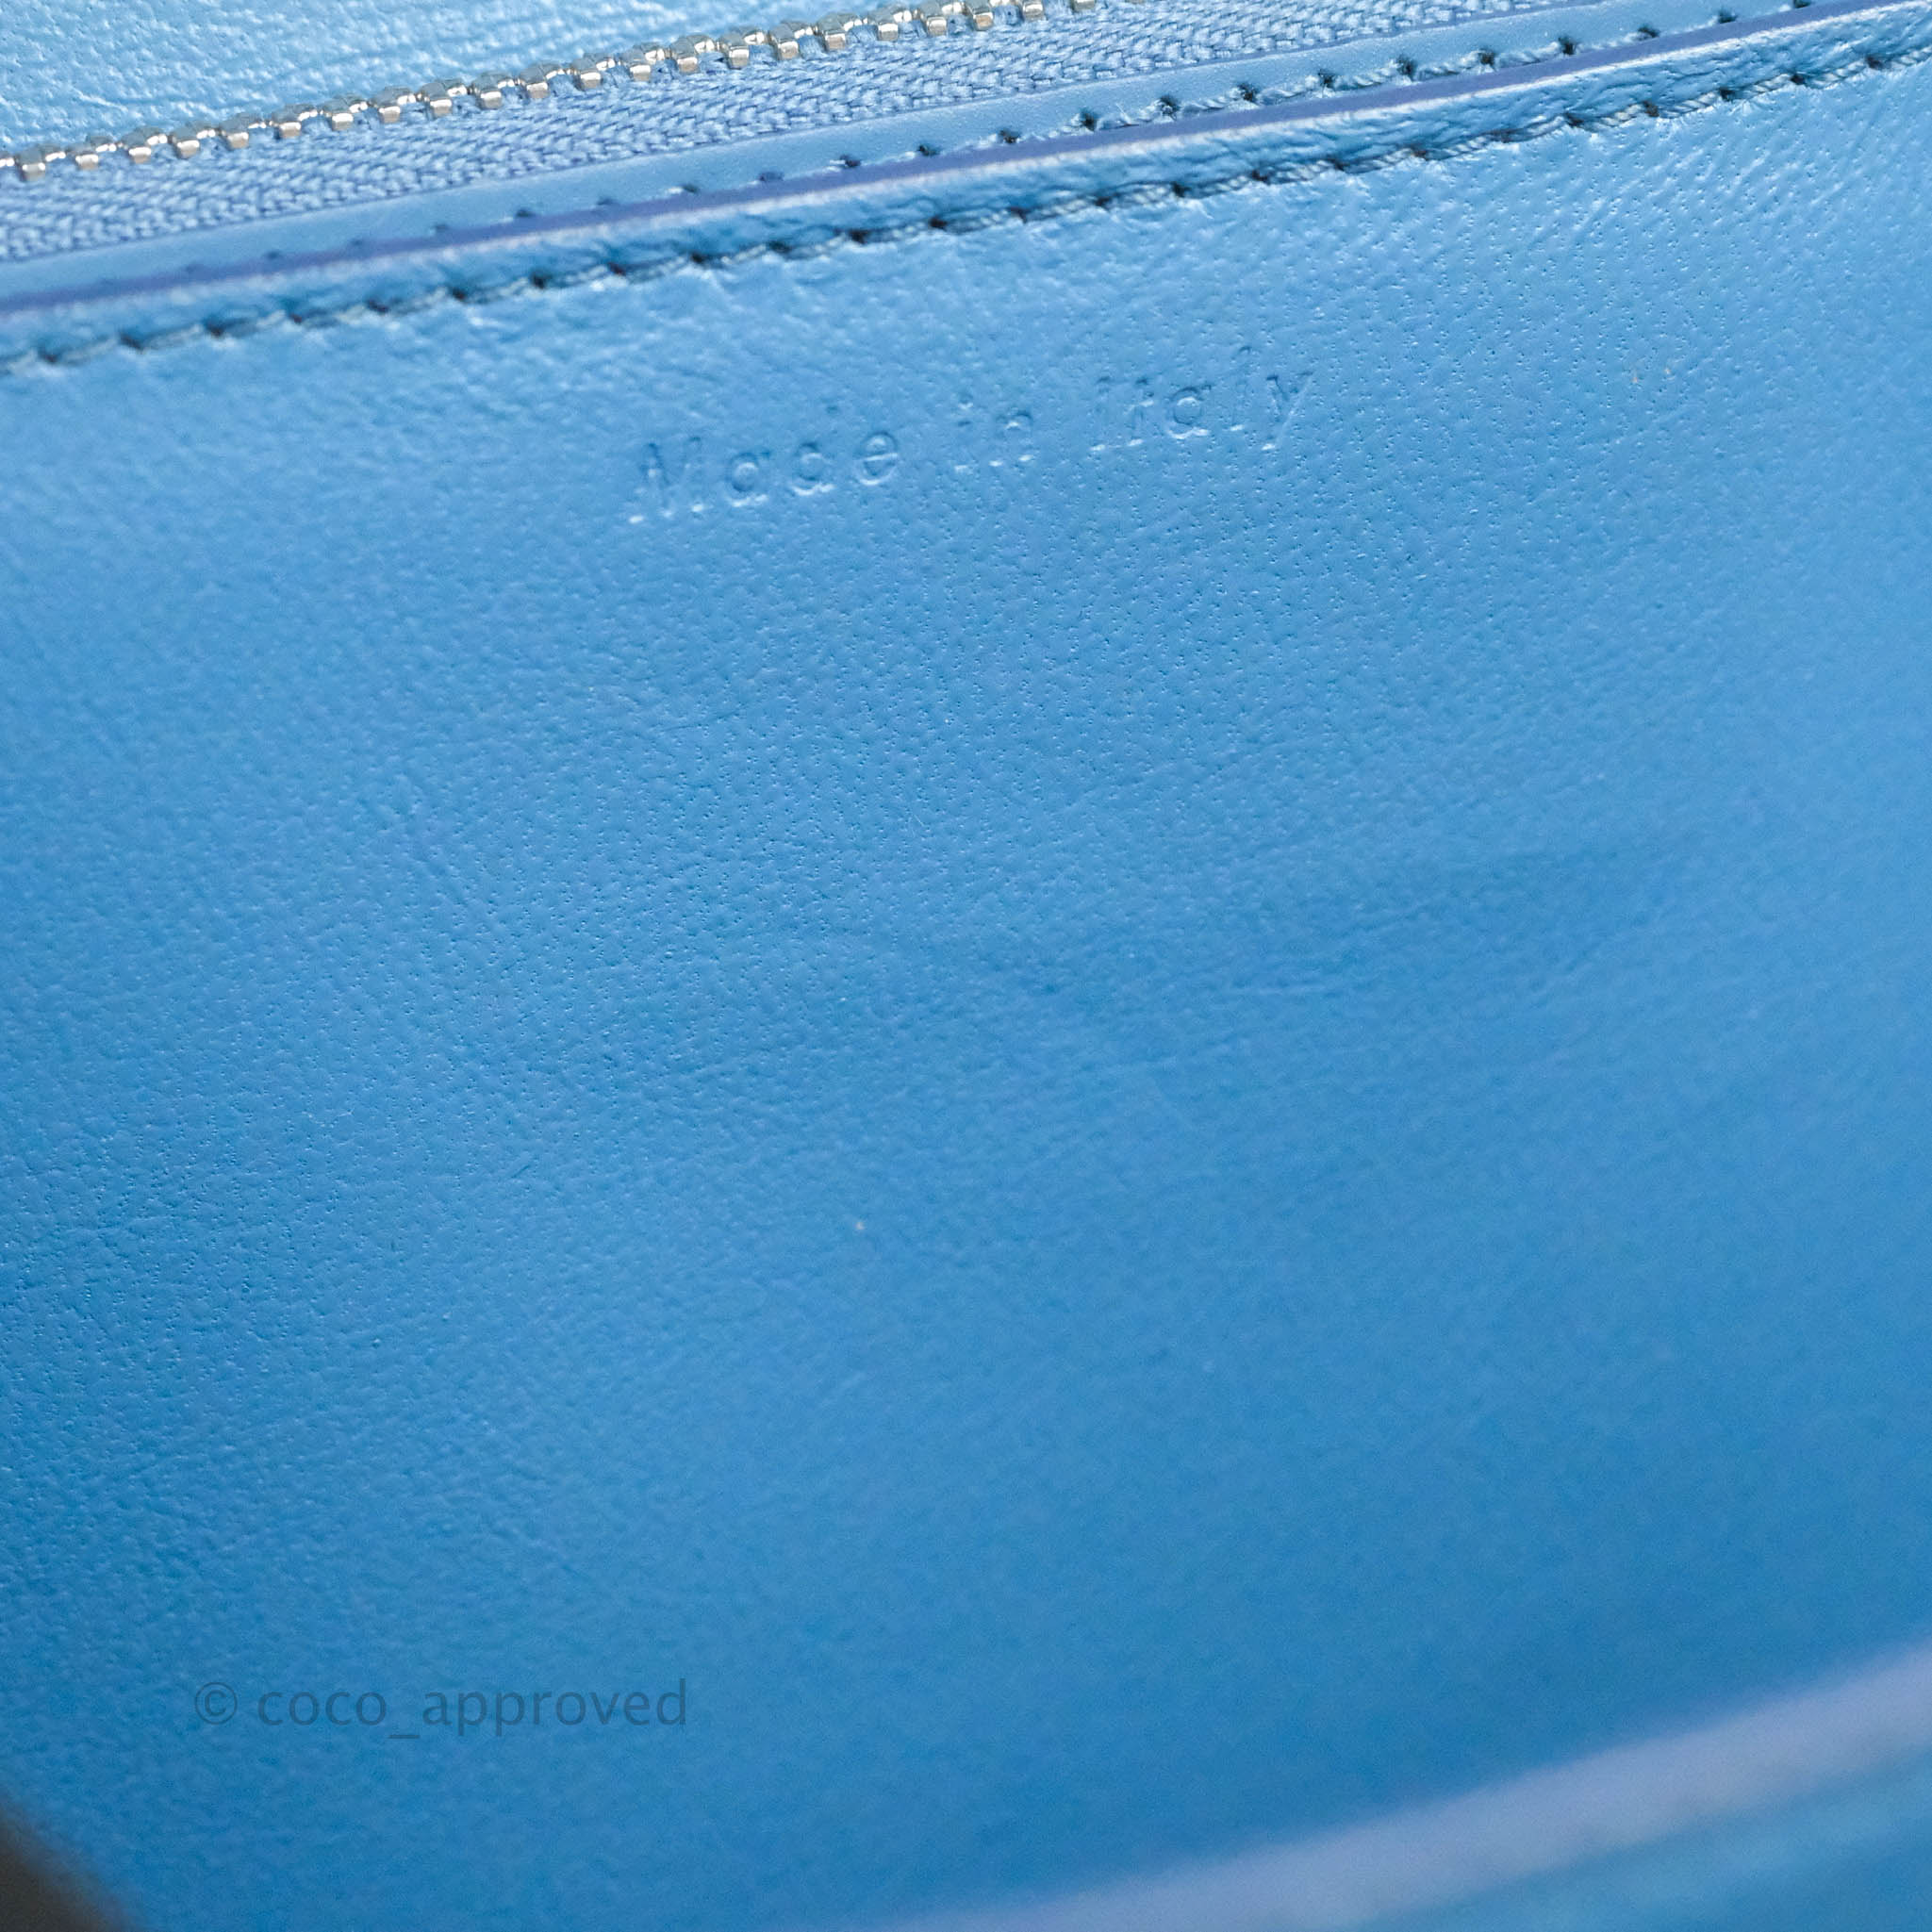 CELINE Box Calfskin Medium Classic Box Flap Bag Navy Blue 133805